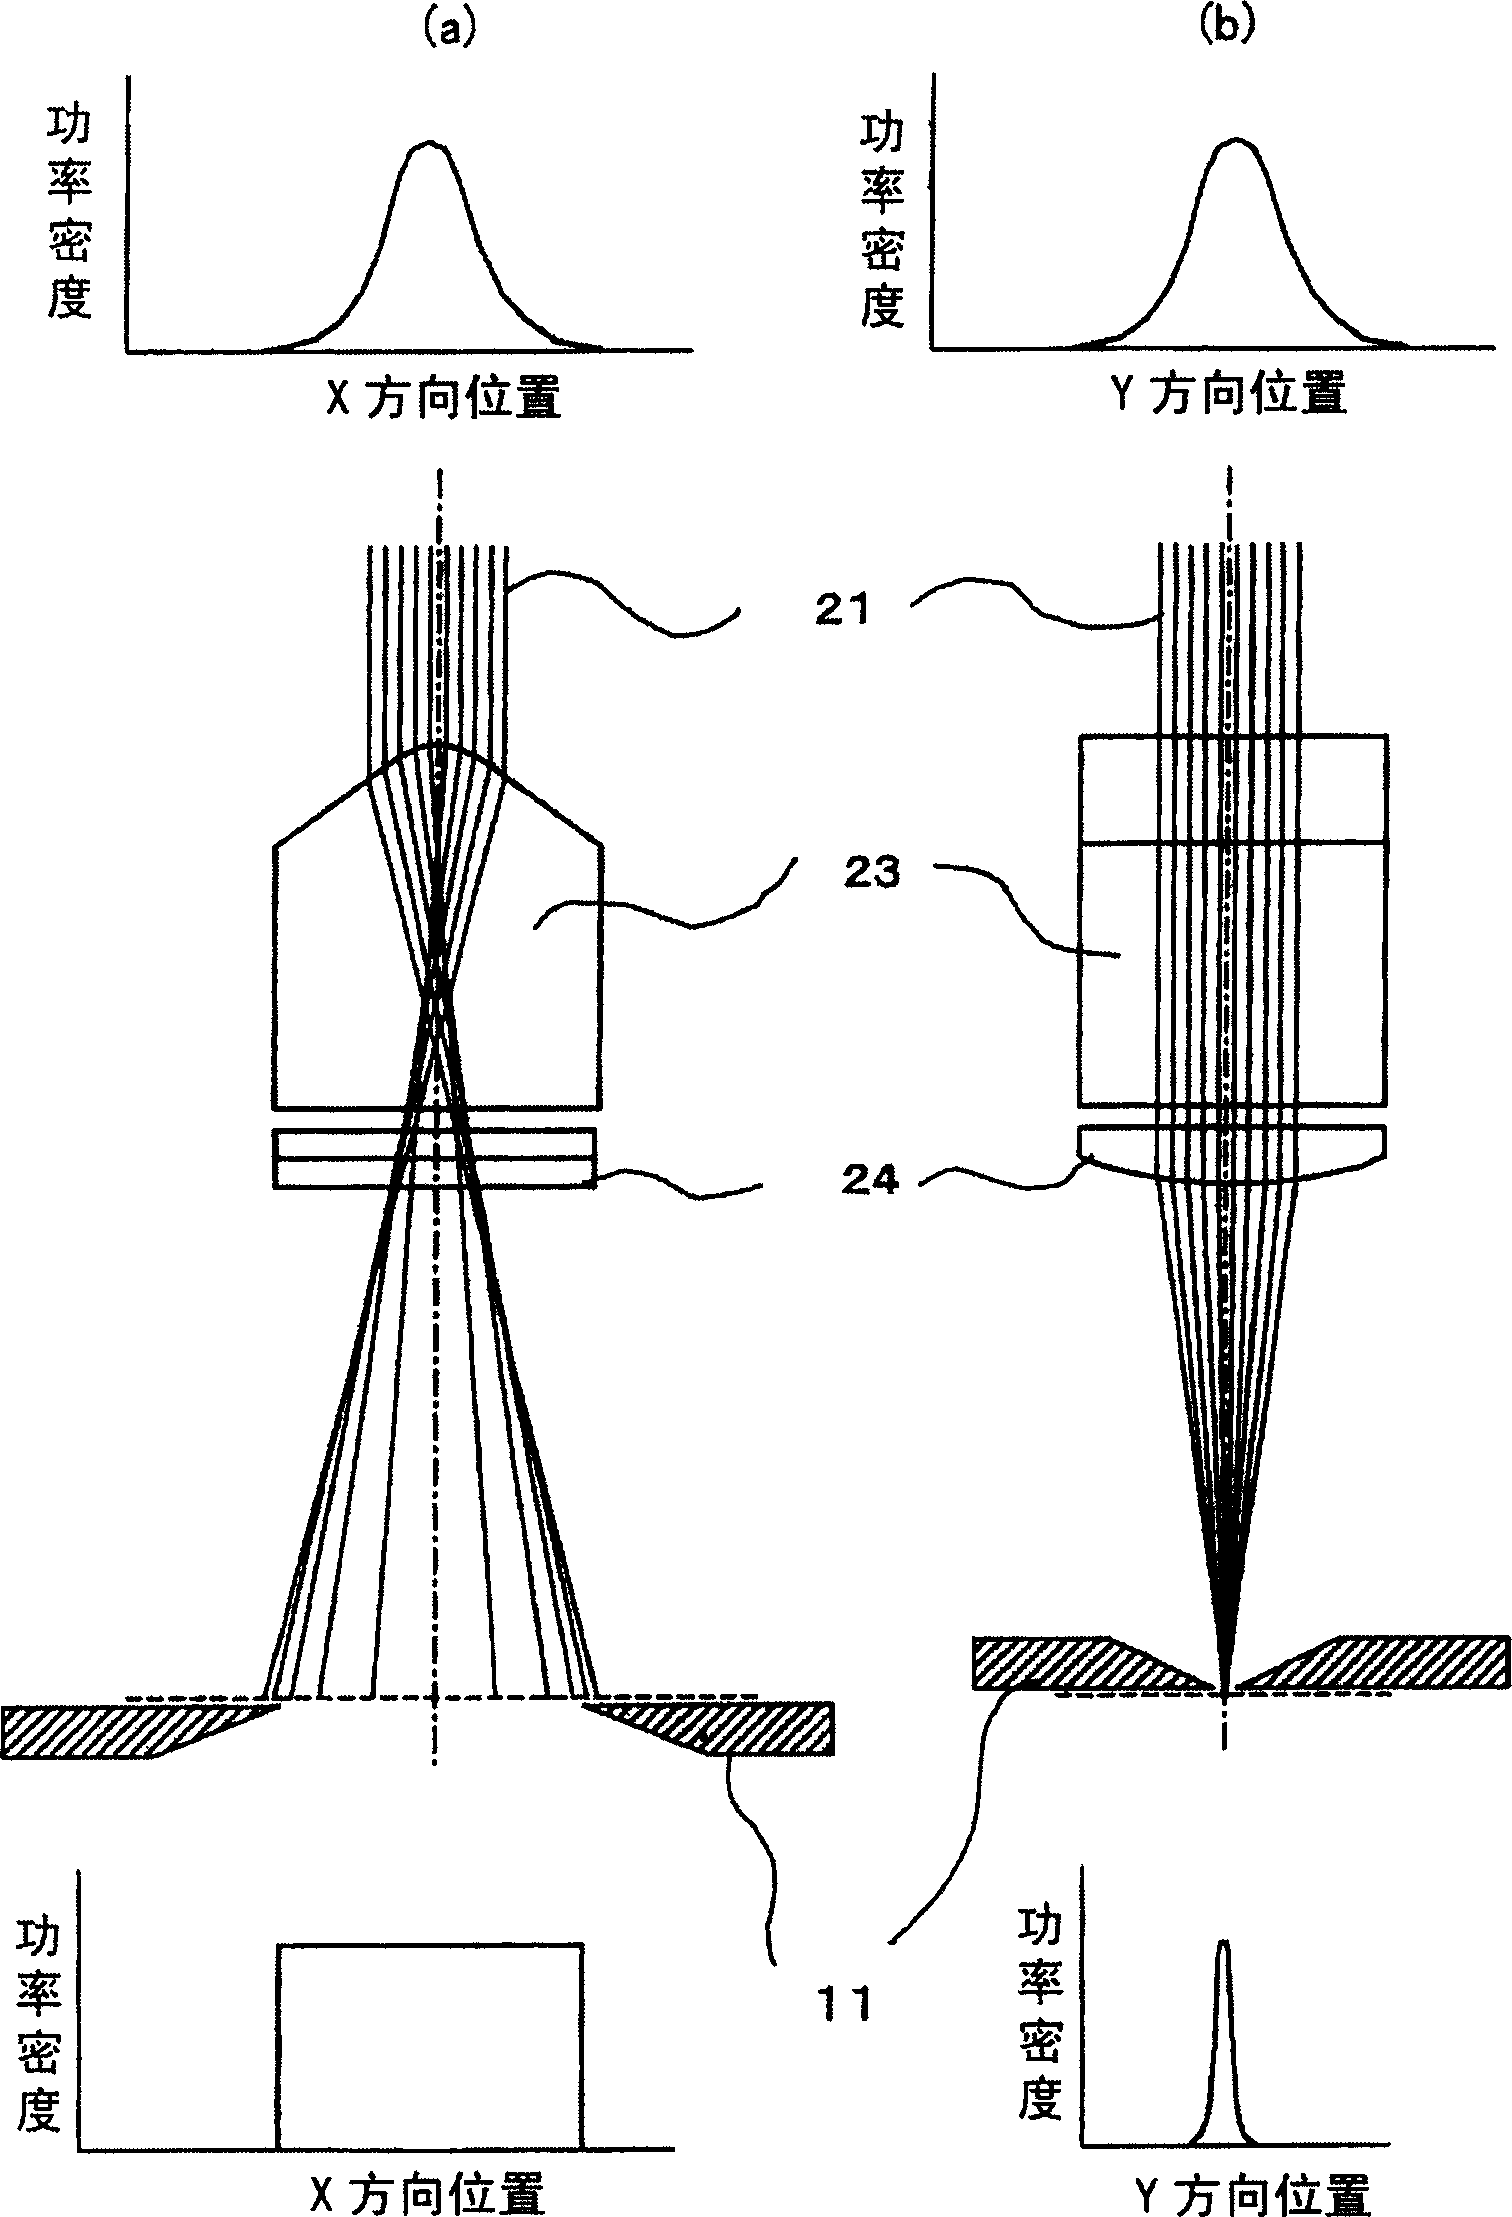 Laser annealing apparatus and annealing method